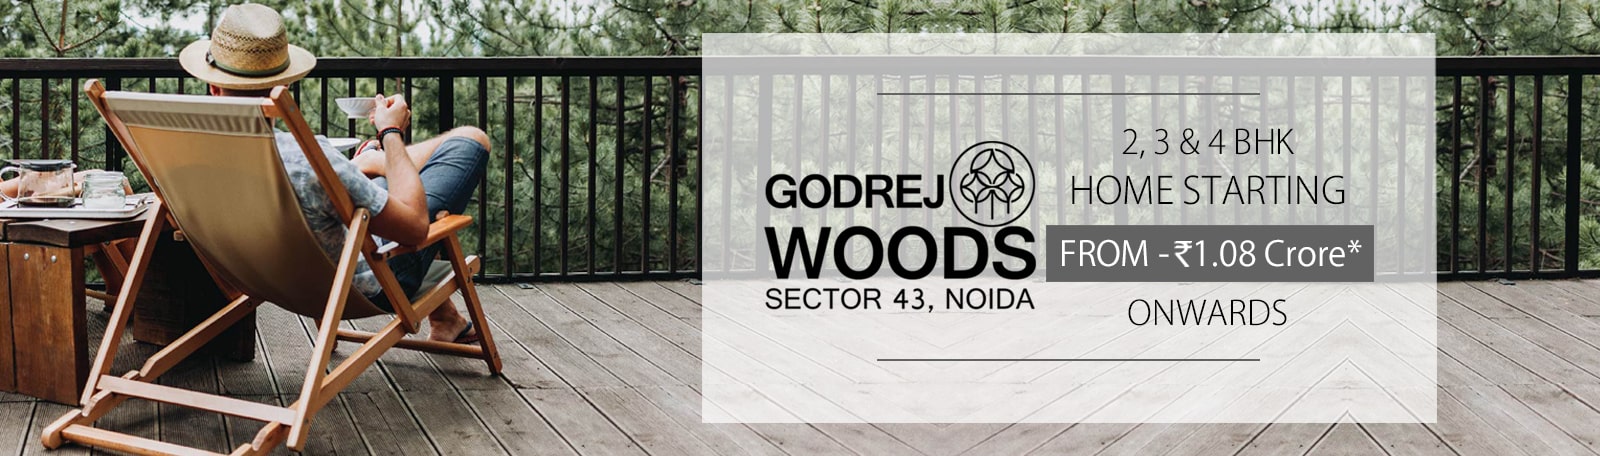 godrej_wood